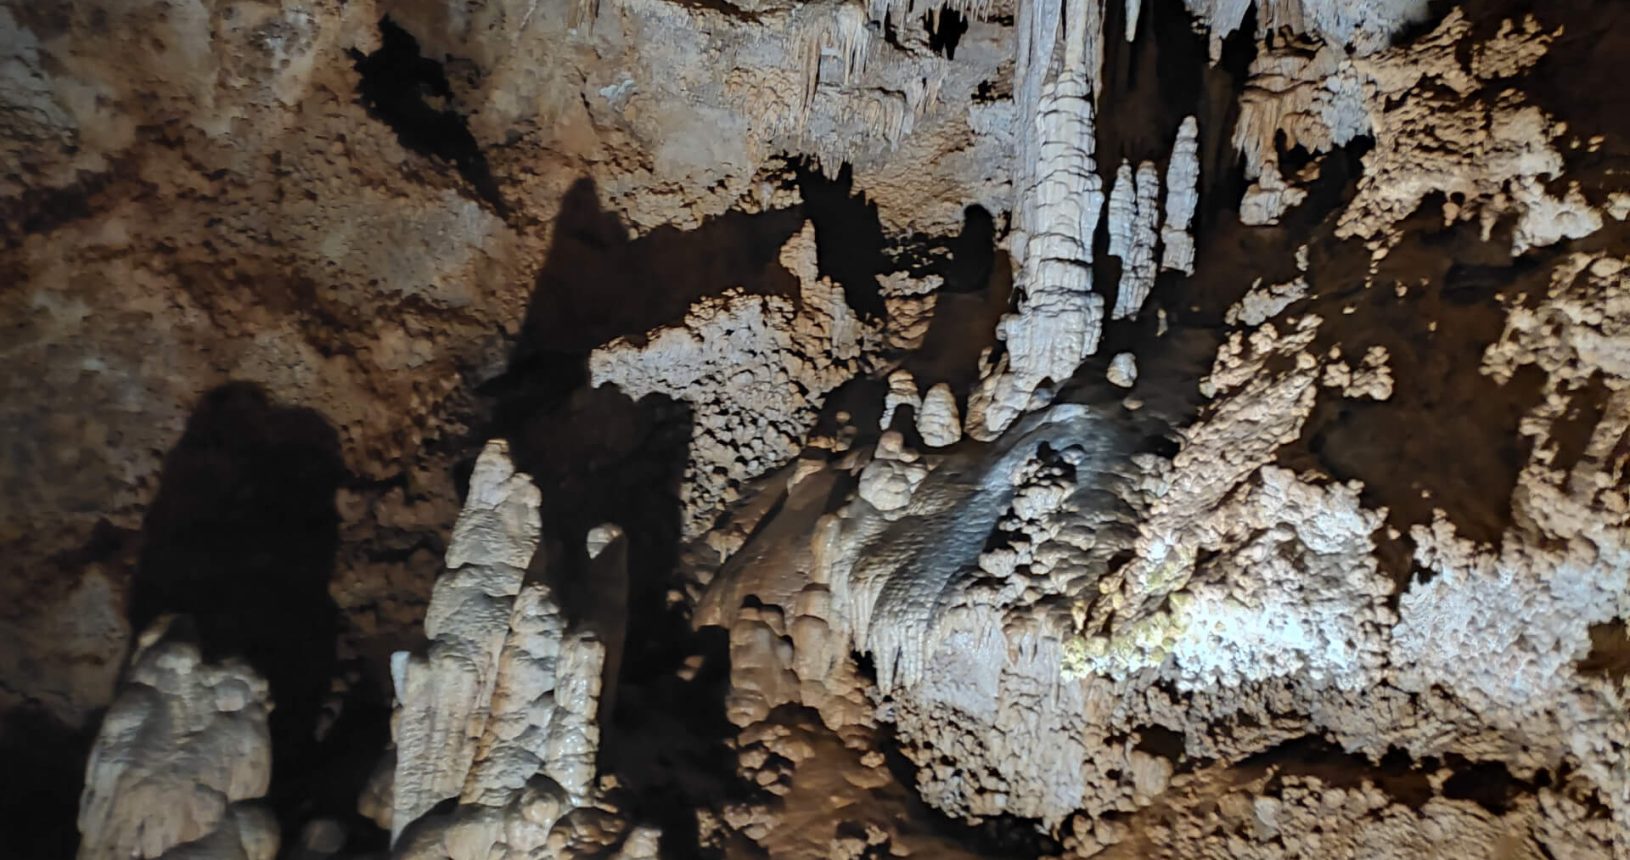 Lipa Cave within nature